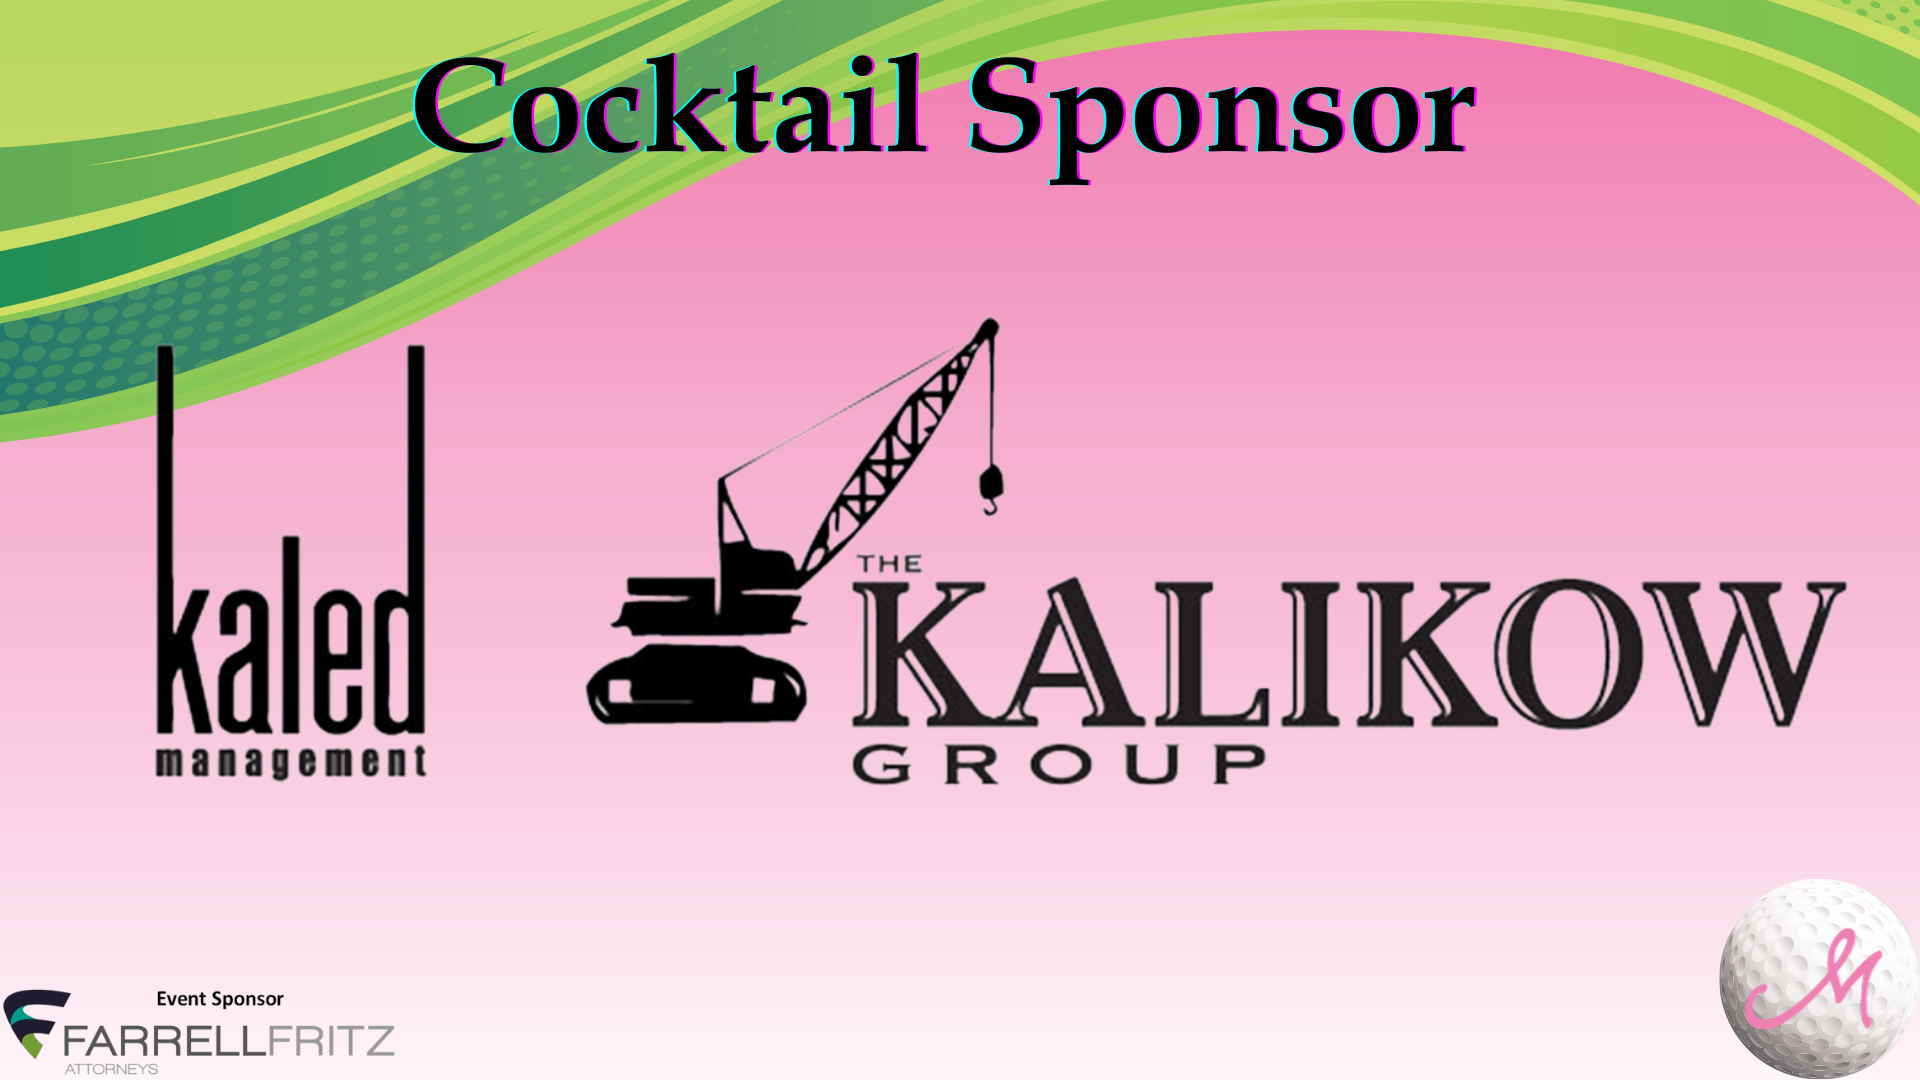 E-Journal – Golf 2022 – Cocktail Sponsor – Kaled Management and The Kalikow Group